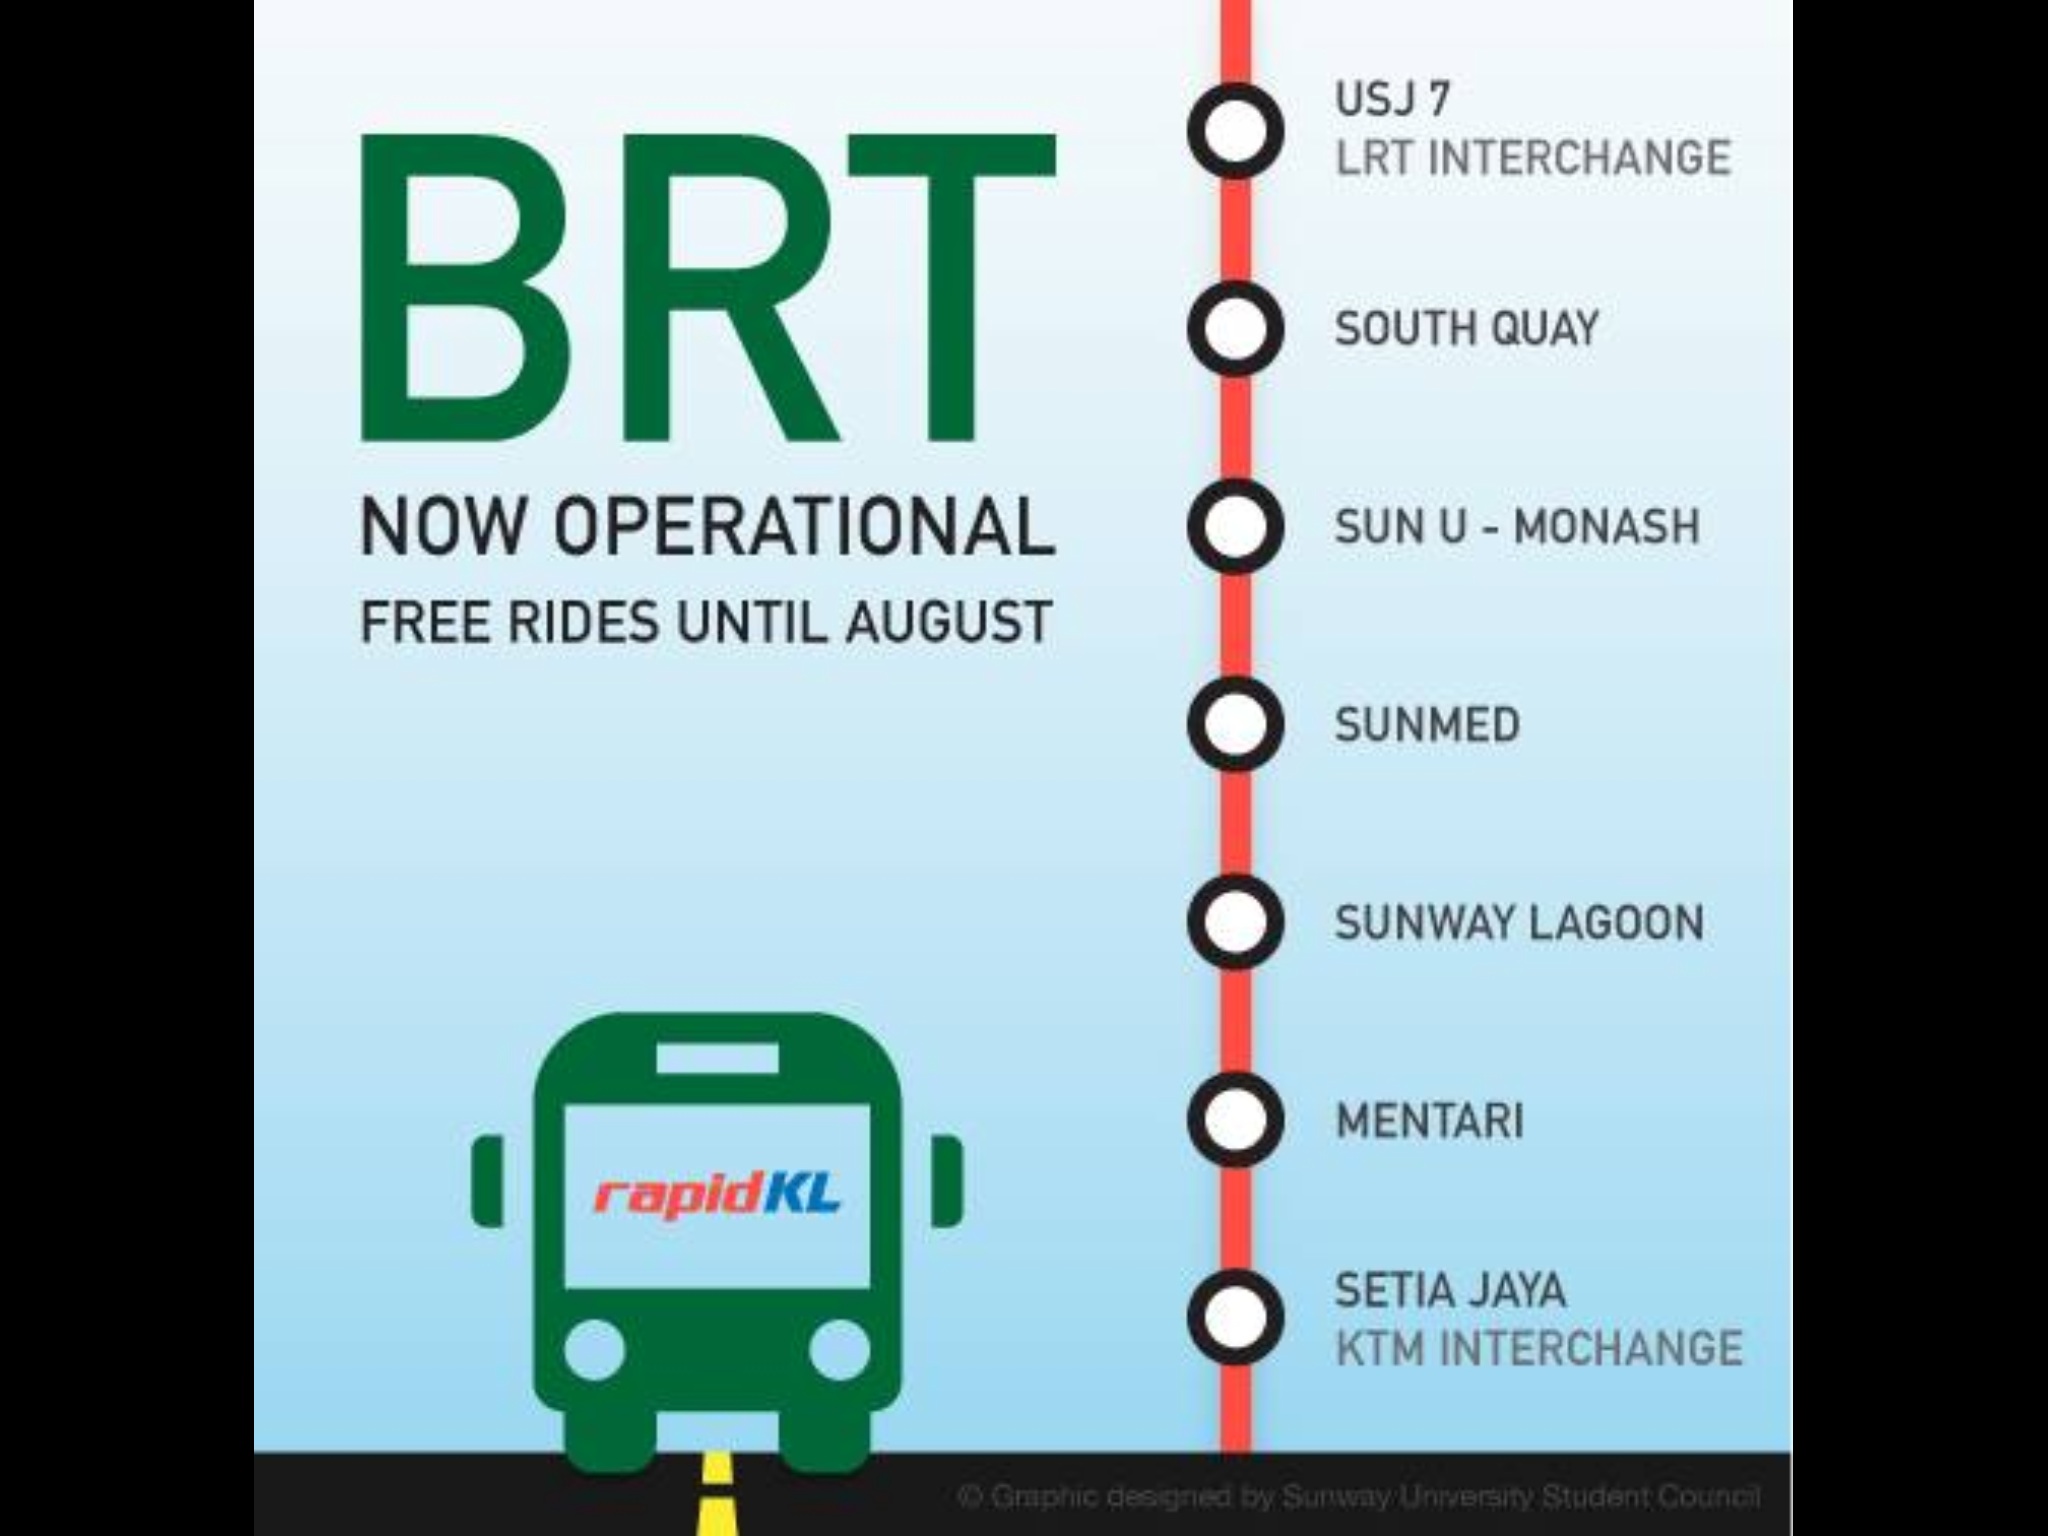 Bus Rapid Transit (BRT) - Sunway Line | Property Malaysia